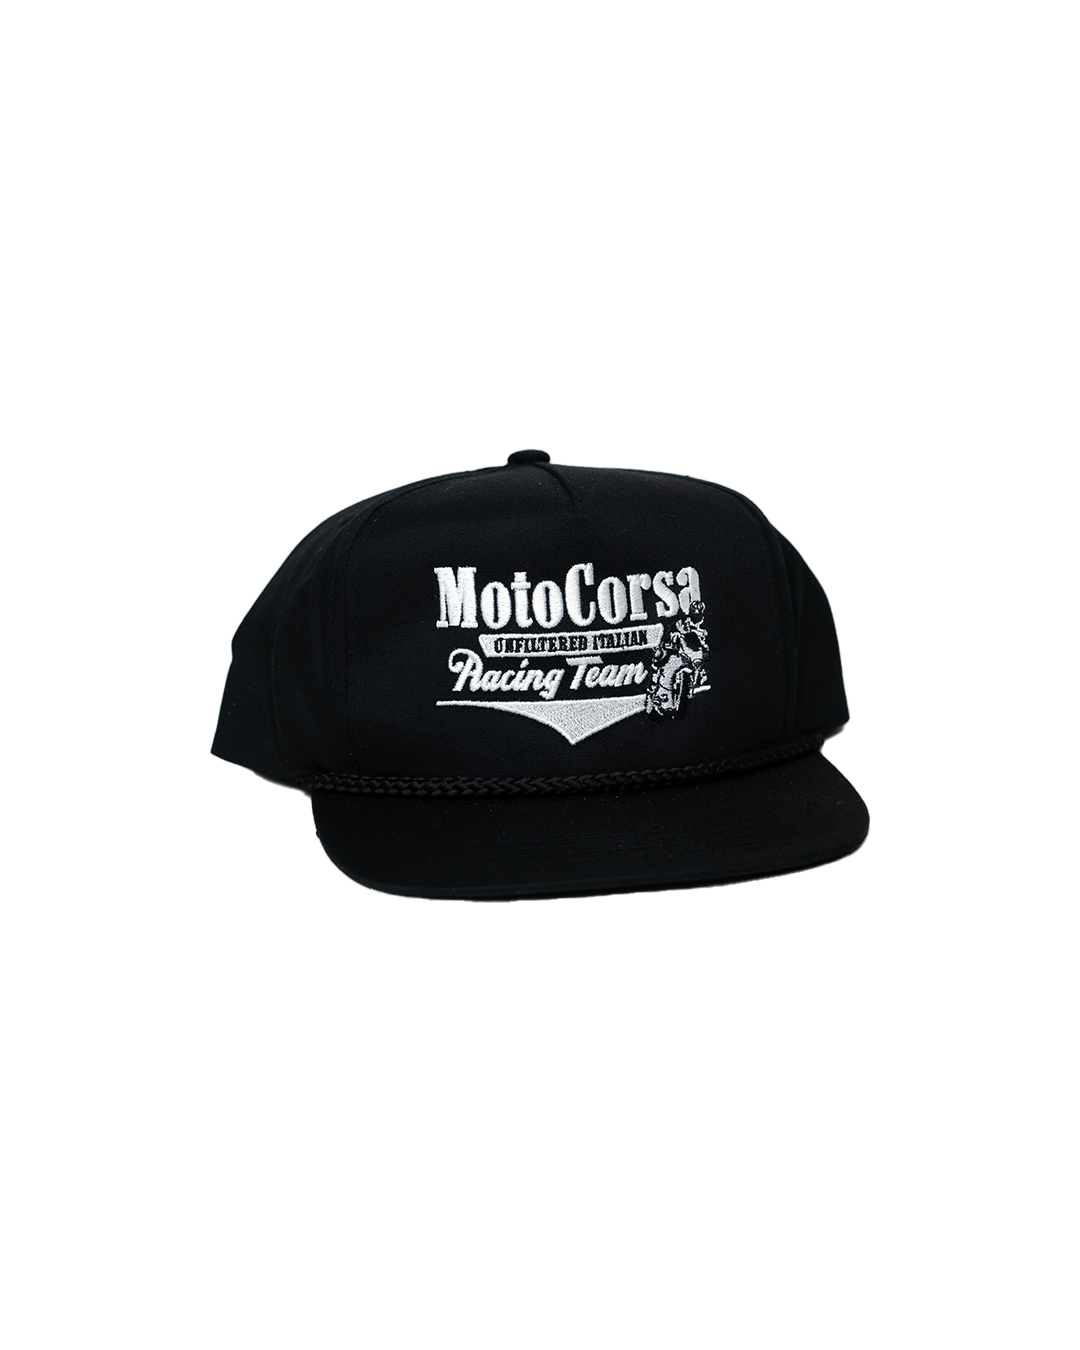 MotoCorsa Unfiltered Italian Hat - Black